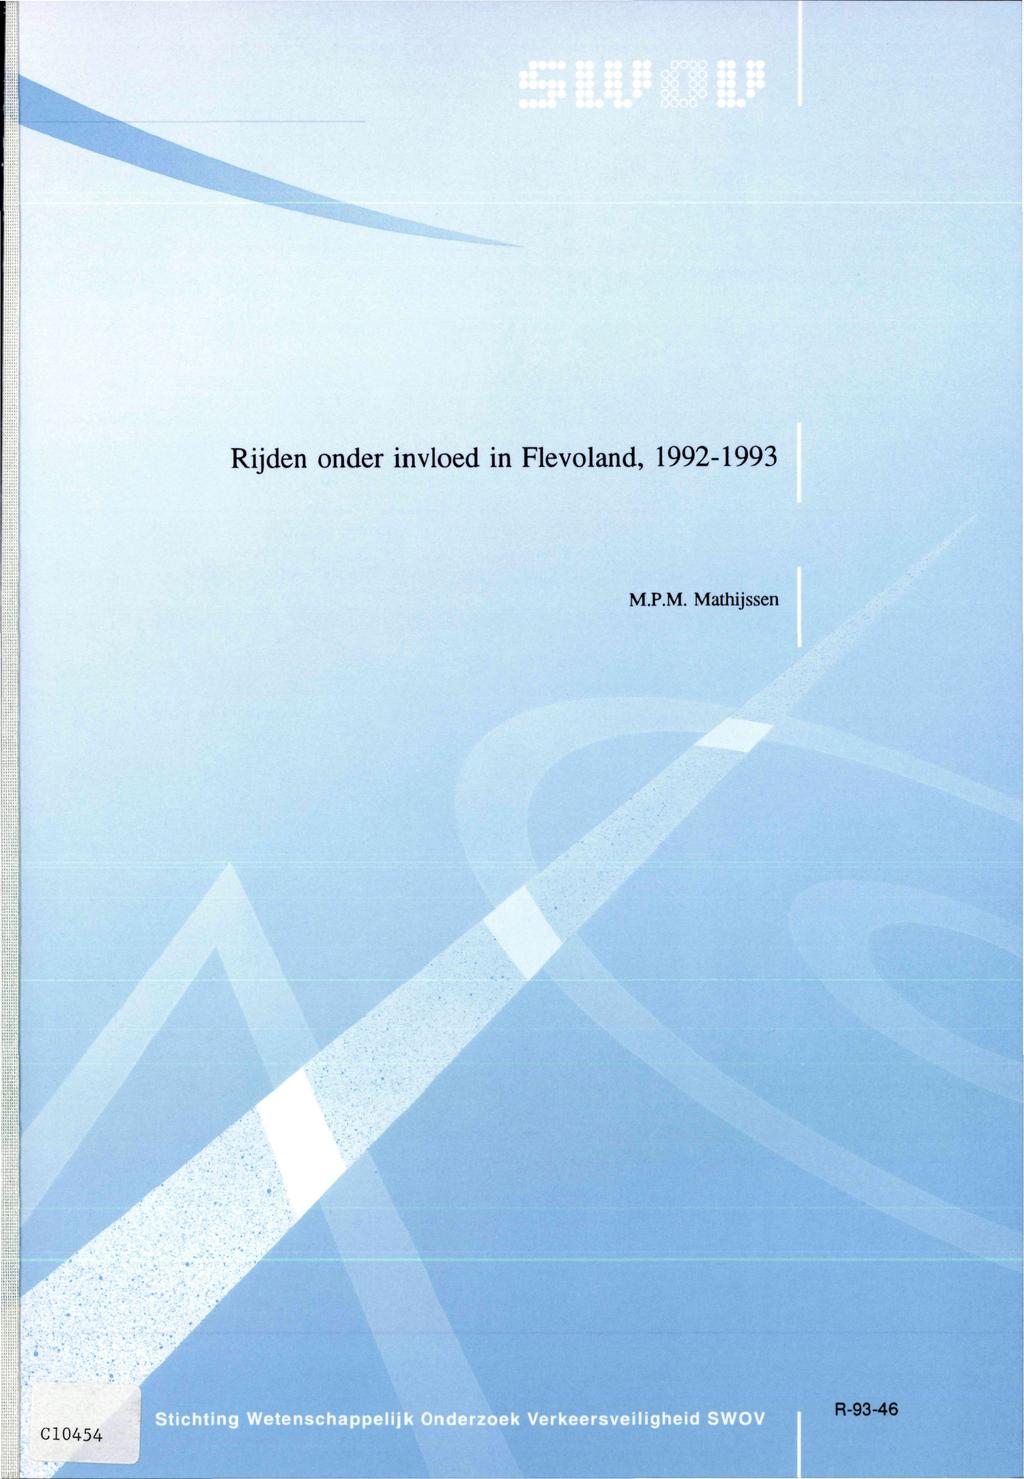 Rijden onder invloed in Flevoland, 1992-1993 M.